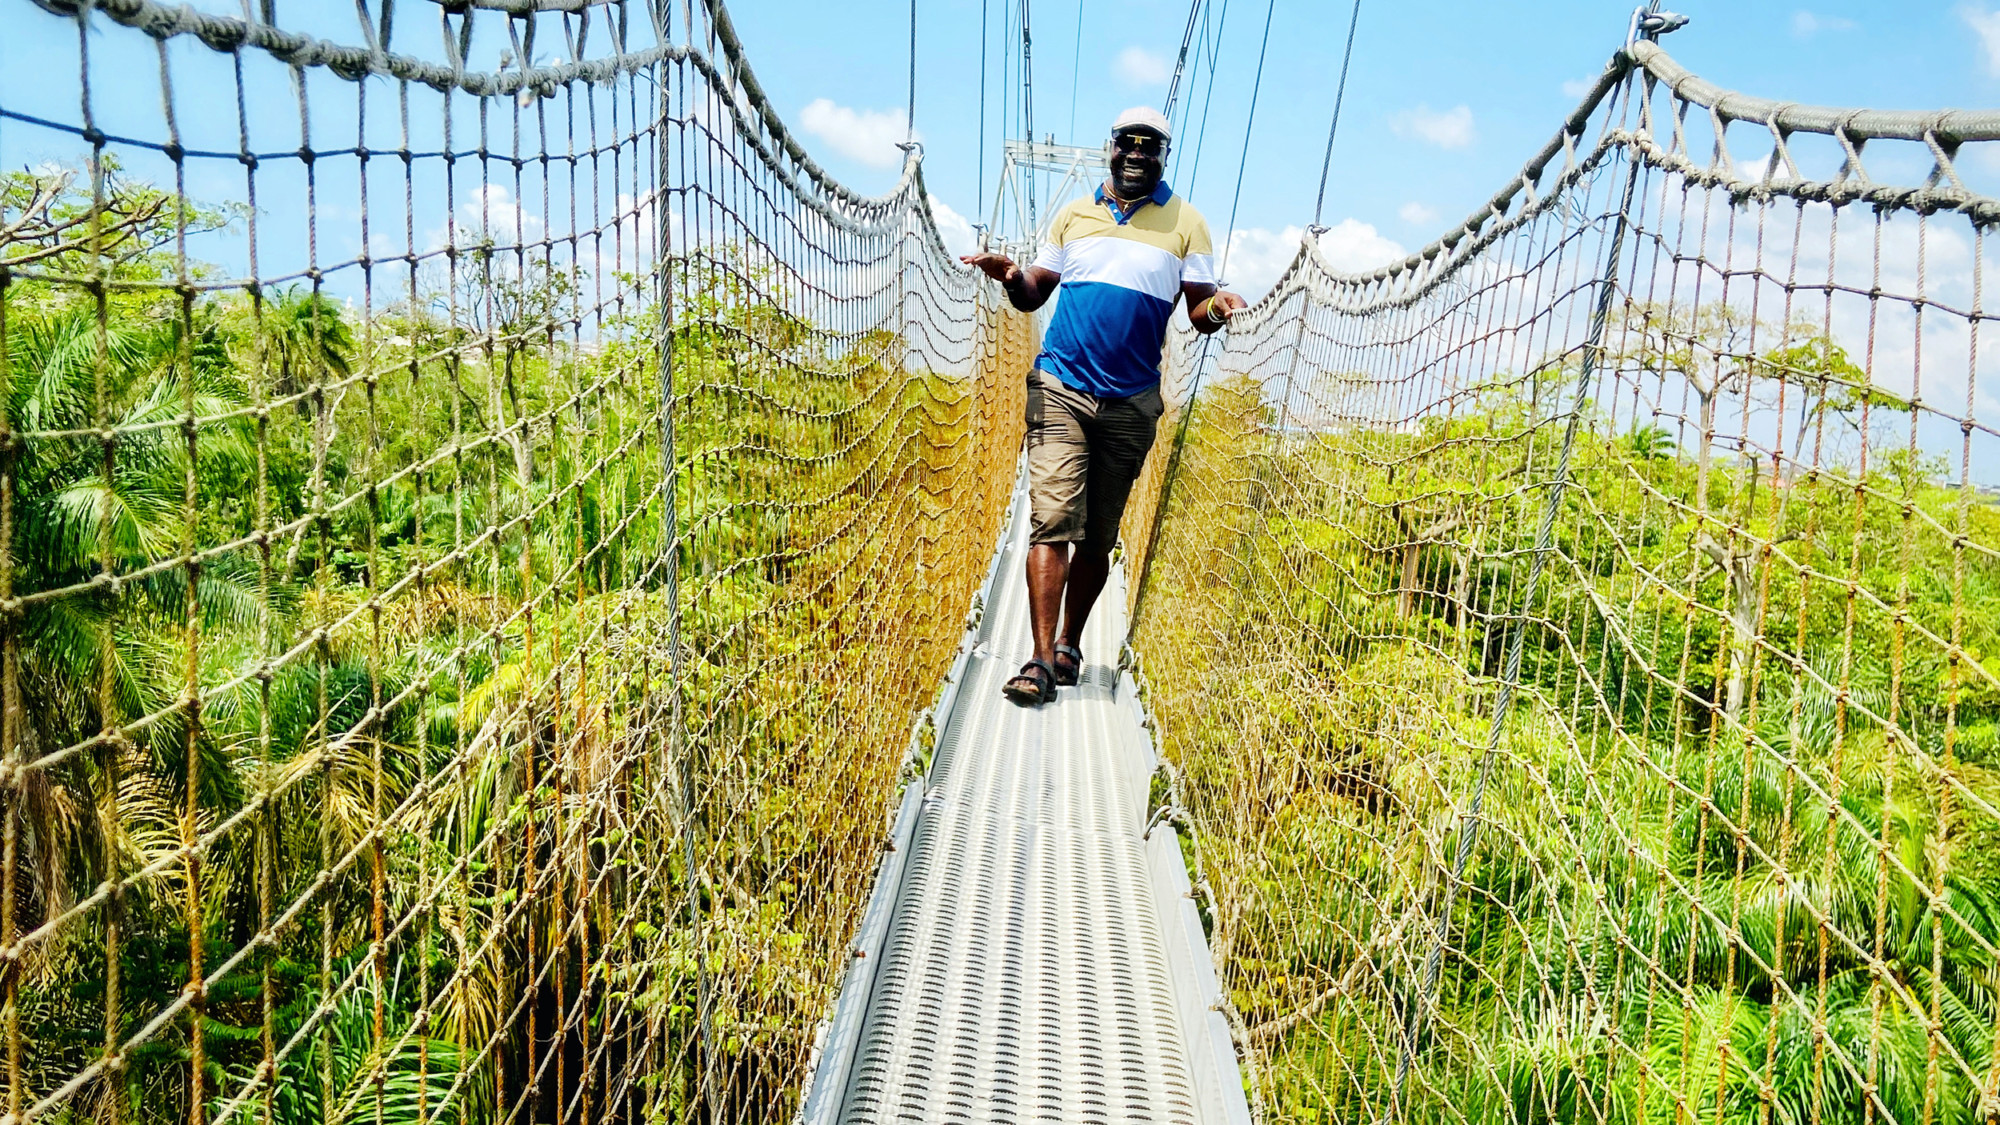 The longest canopy walk in Africa, Lekki Conservation Centre, Nigeria